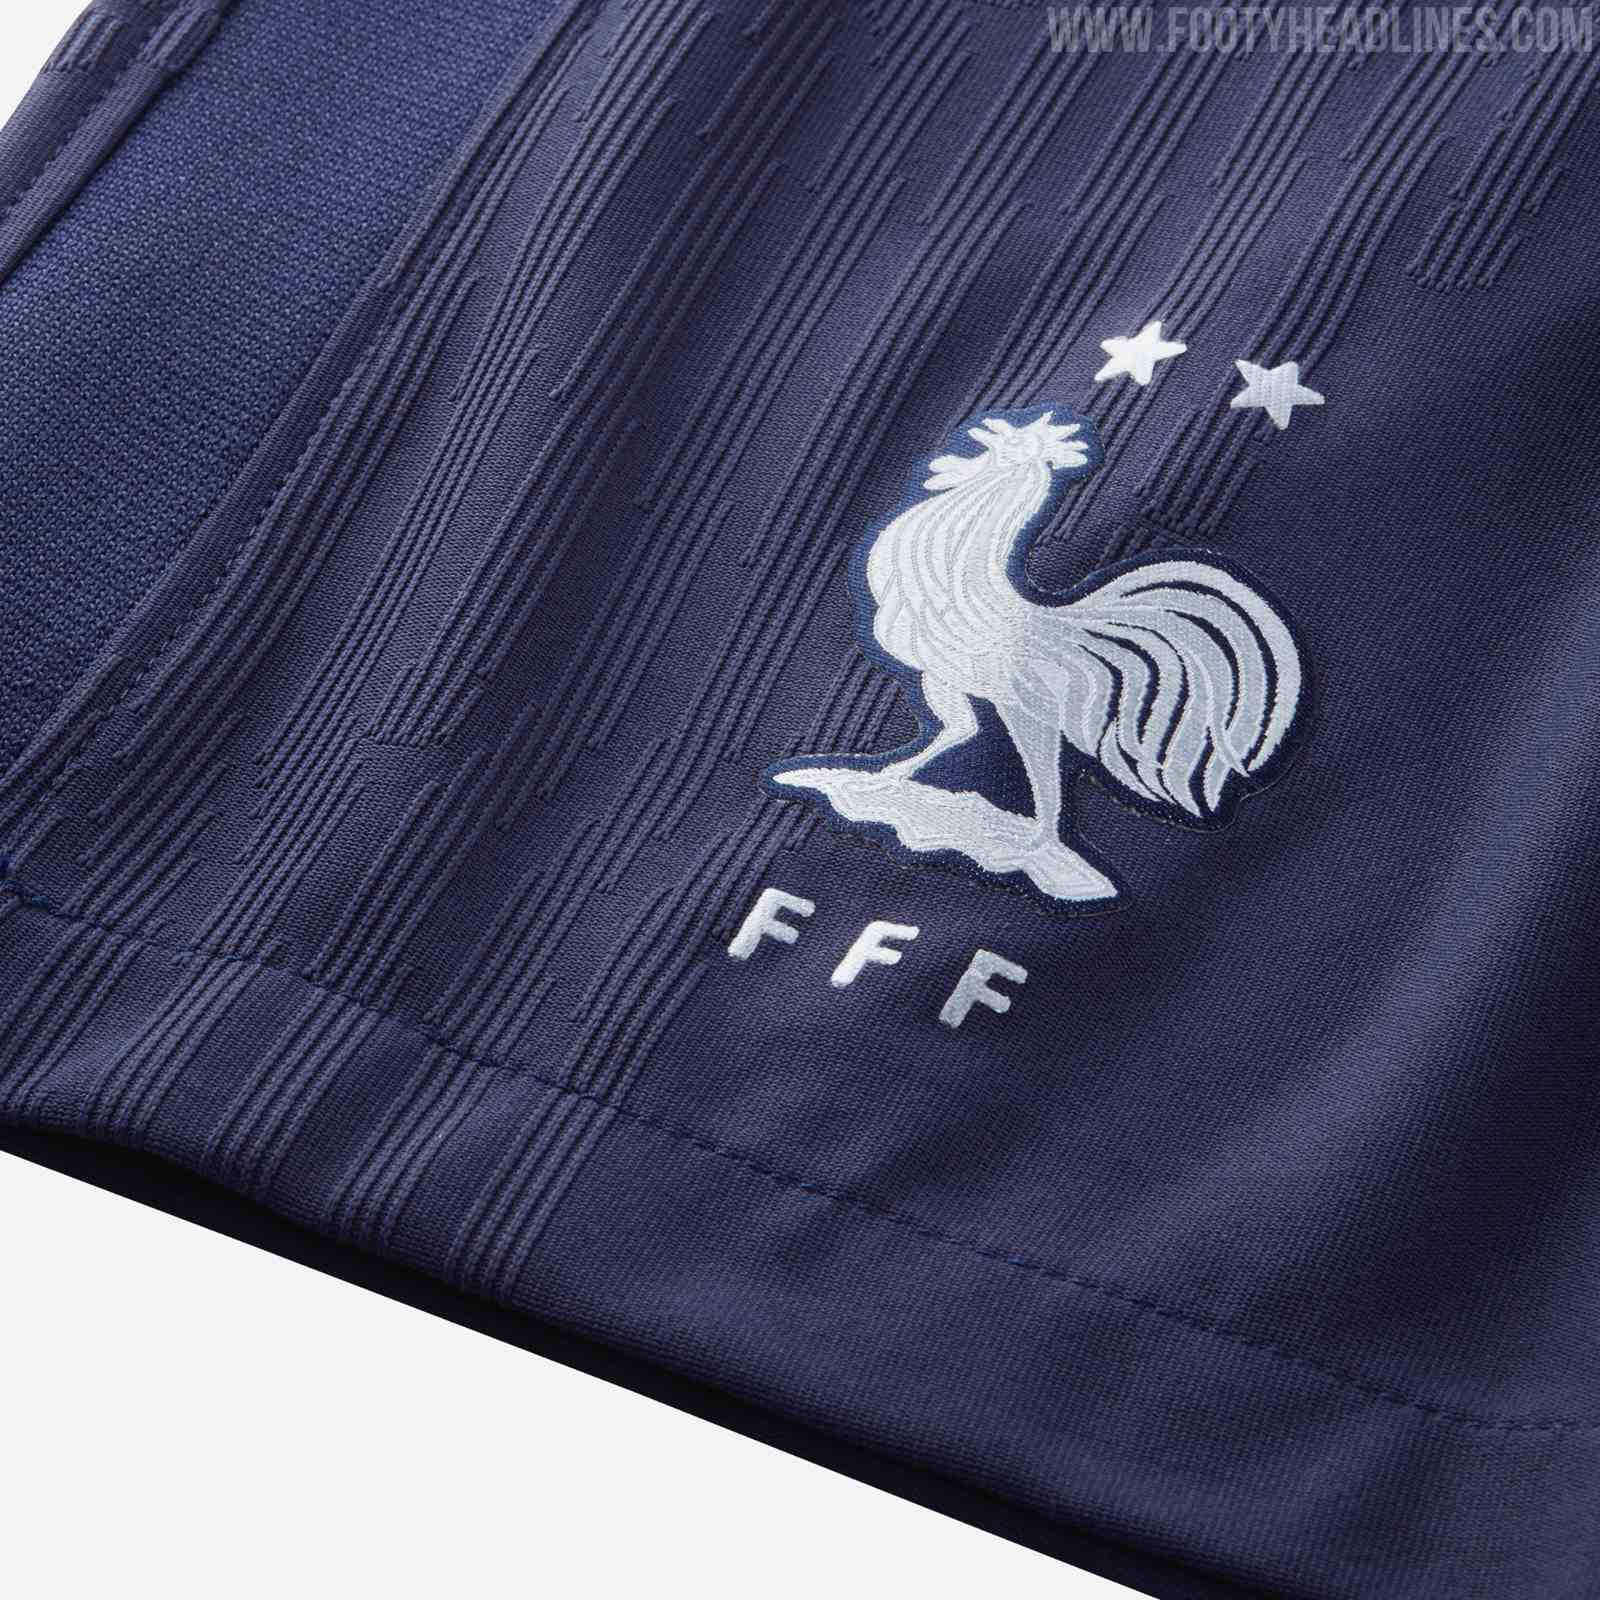 Nike France Euro 2020 Home Kit Released - Footy Headlines